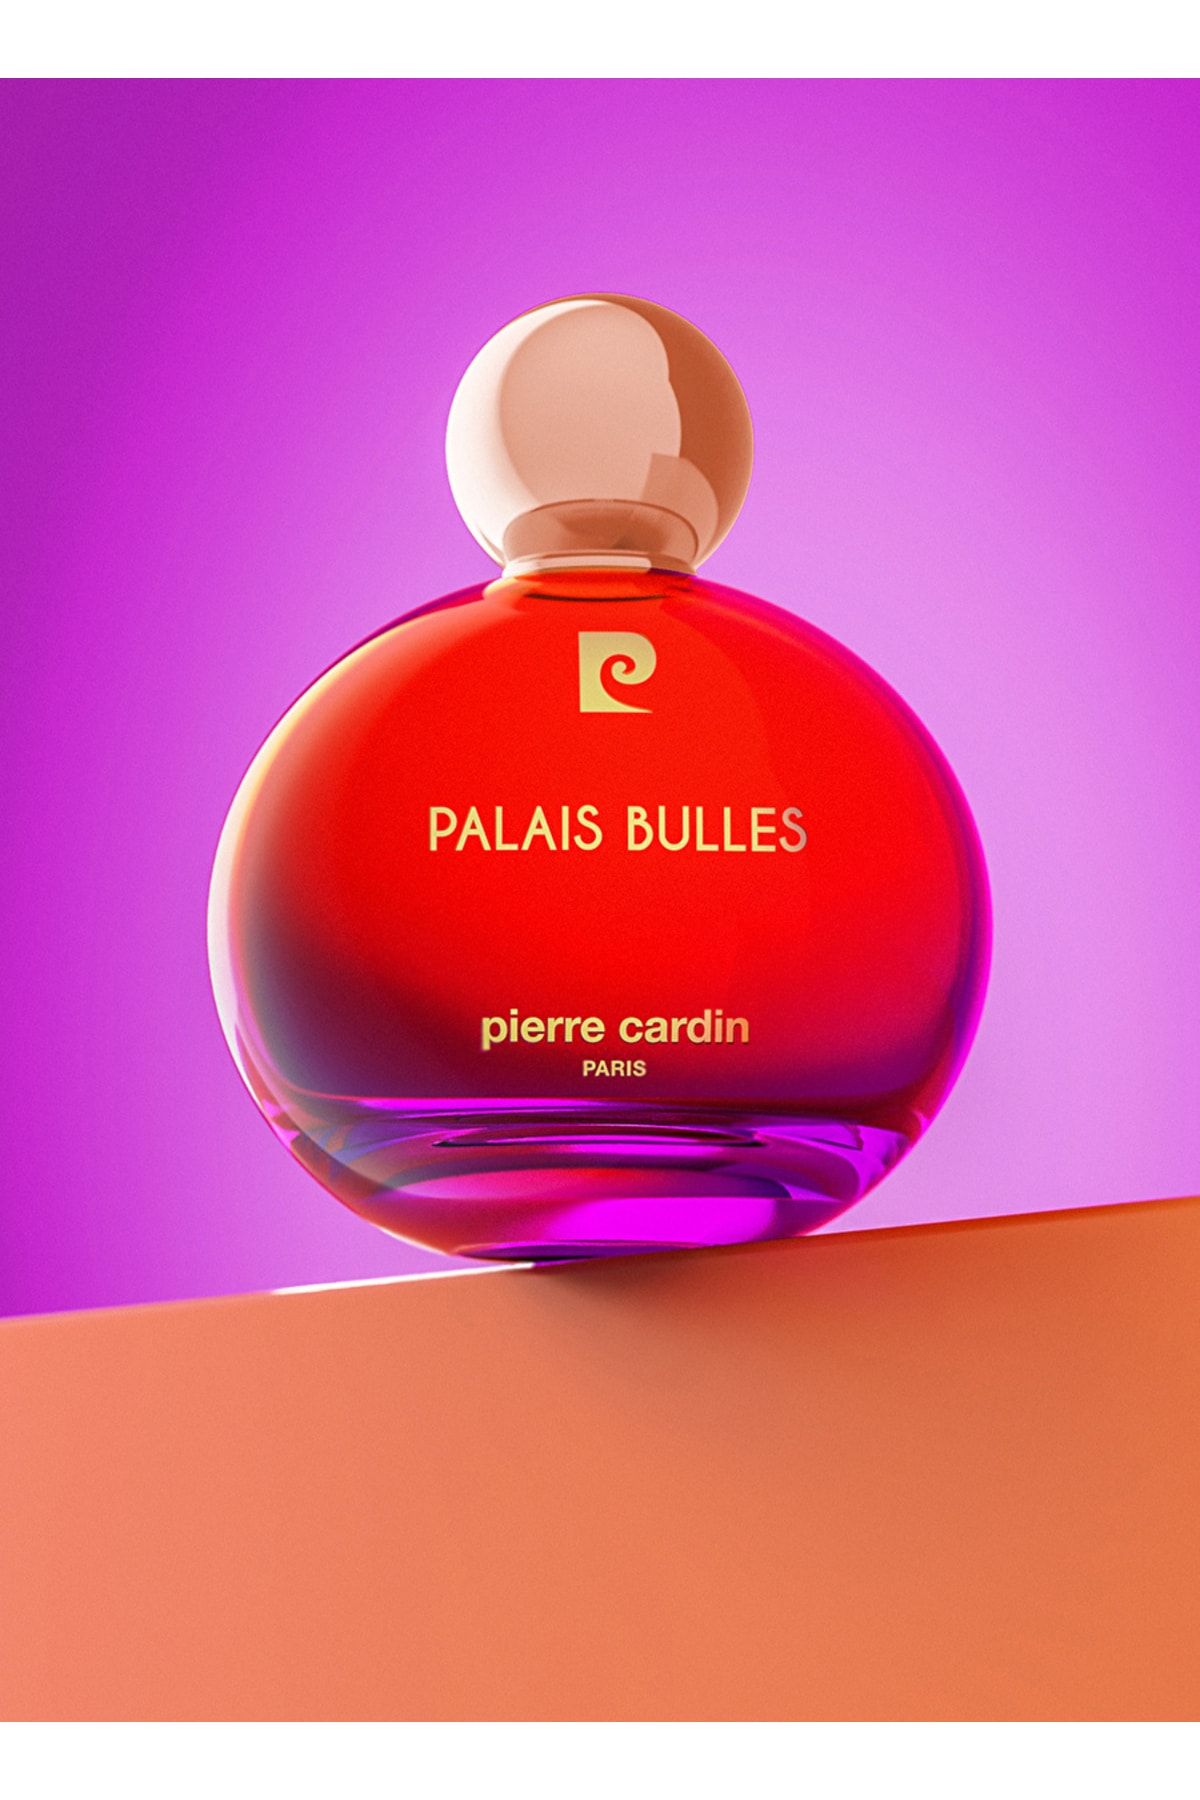 Pierre Cardin Palais Bulles ادوپرفیوم 100 ml عطر زنانه بادام سینامون توبروز